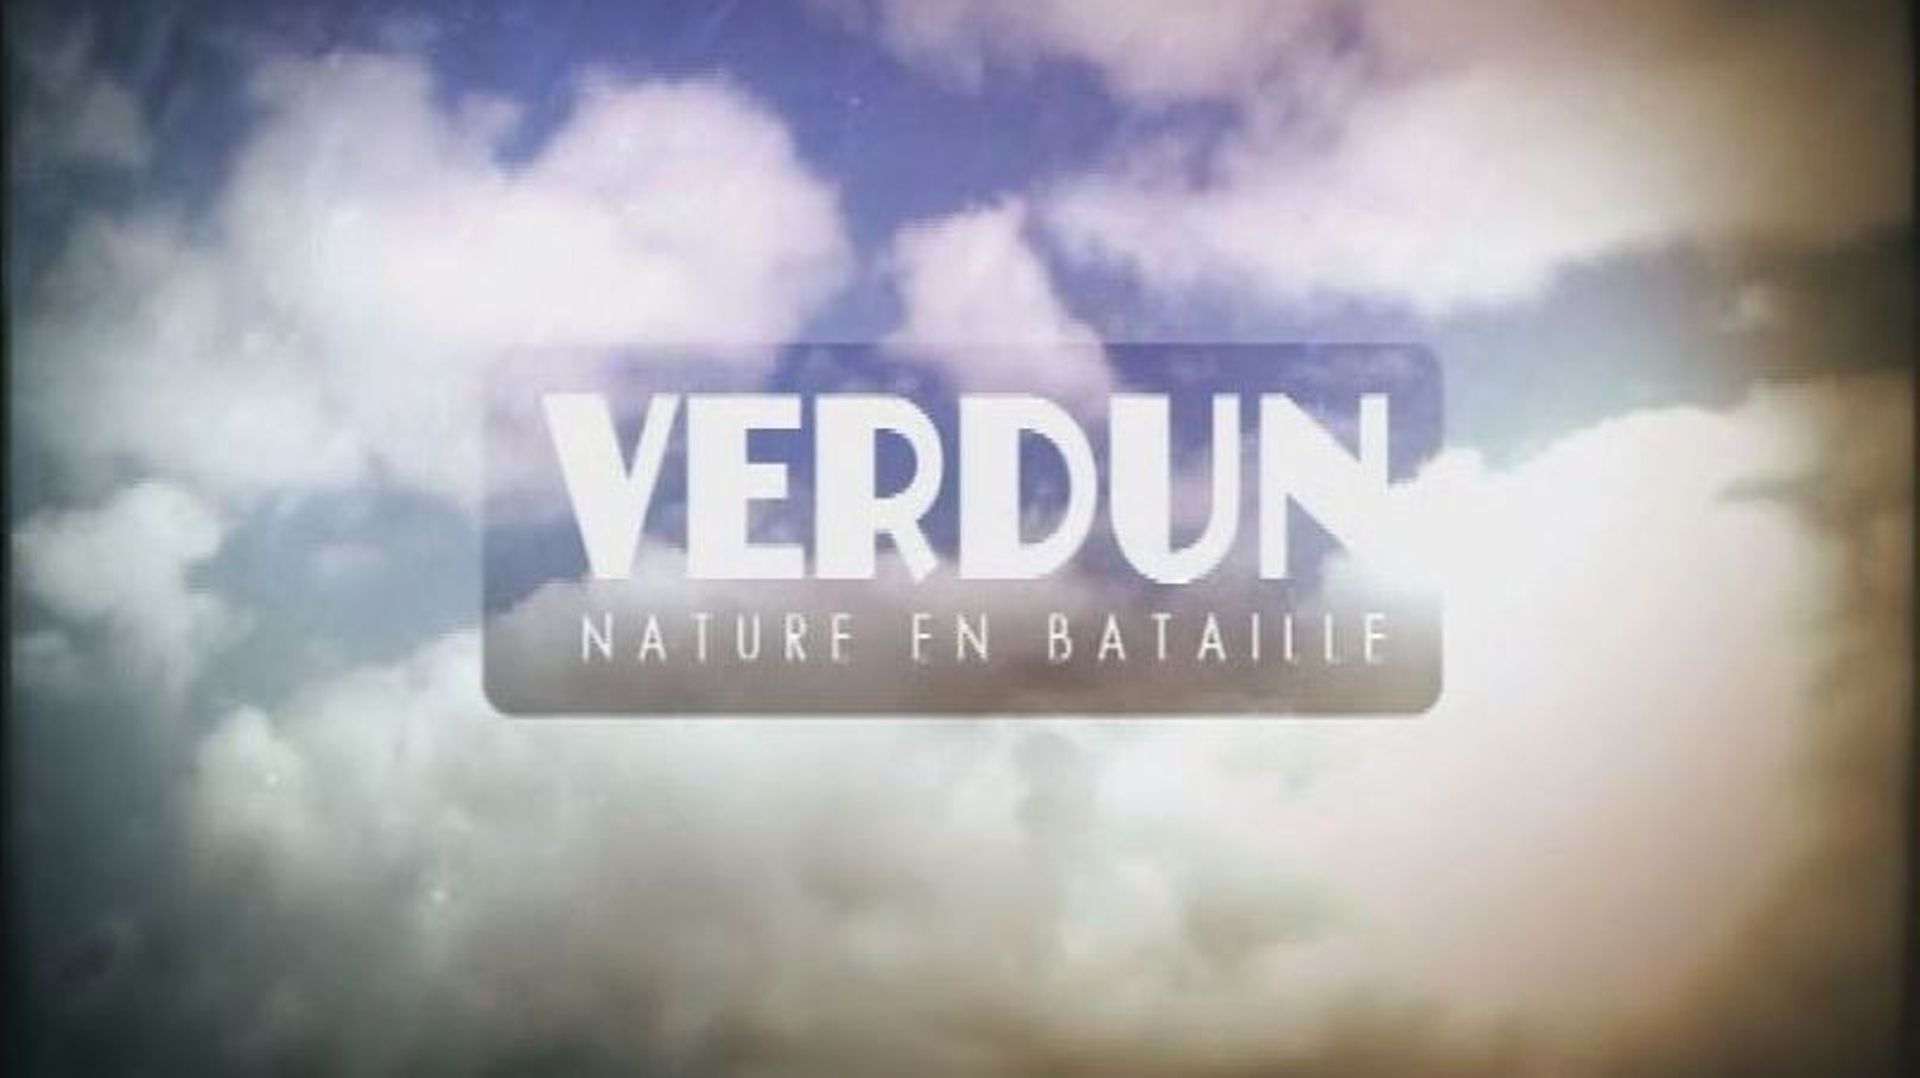 Verdun nature en bataille